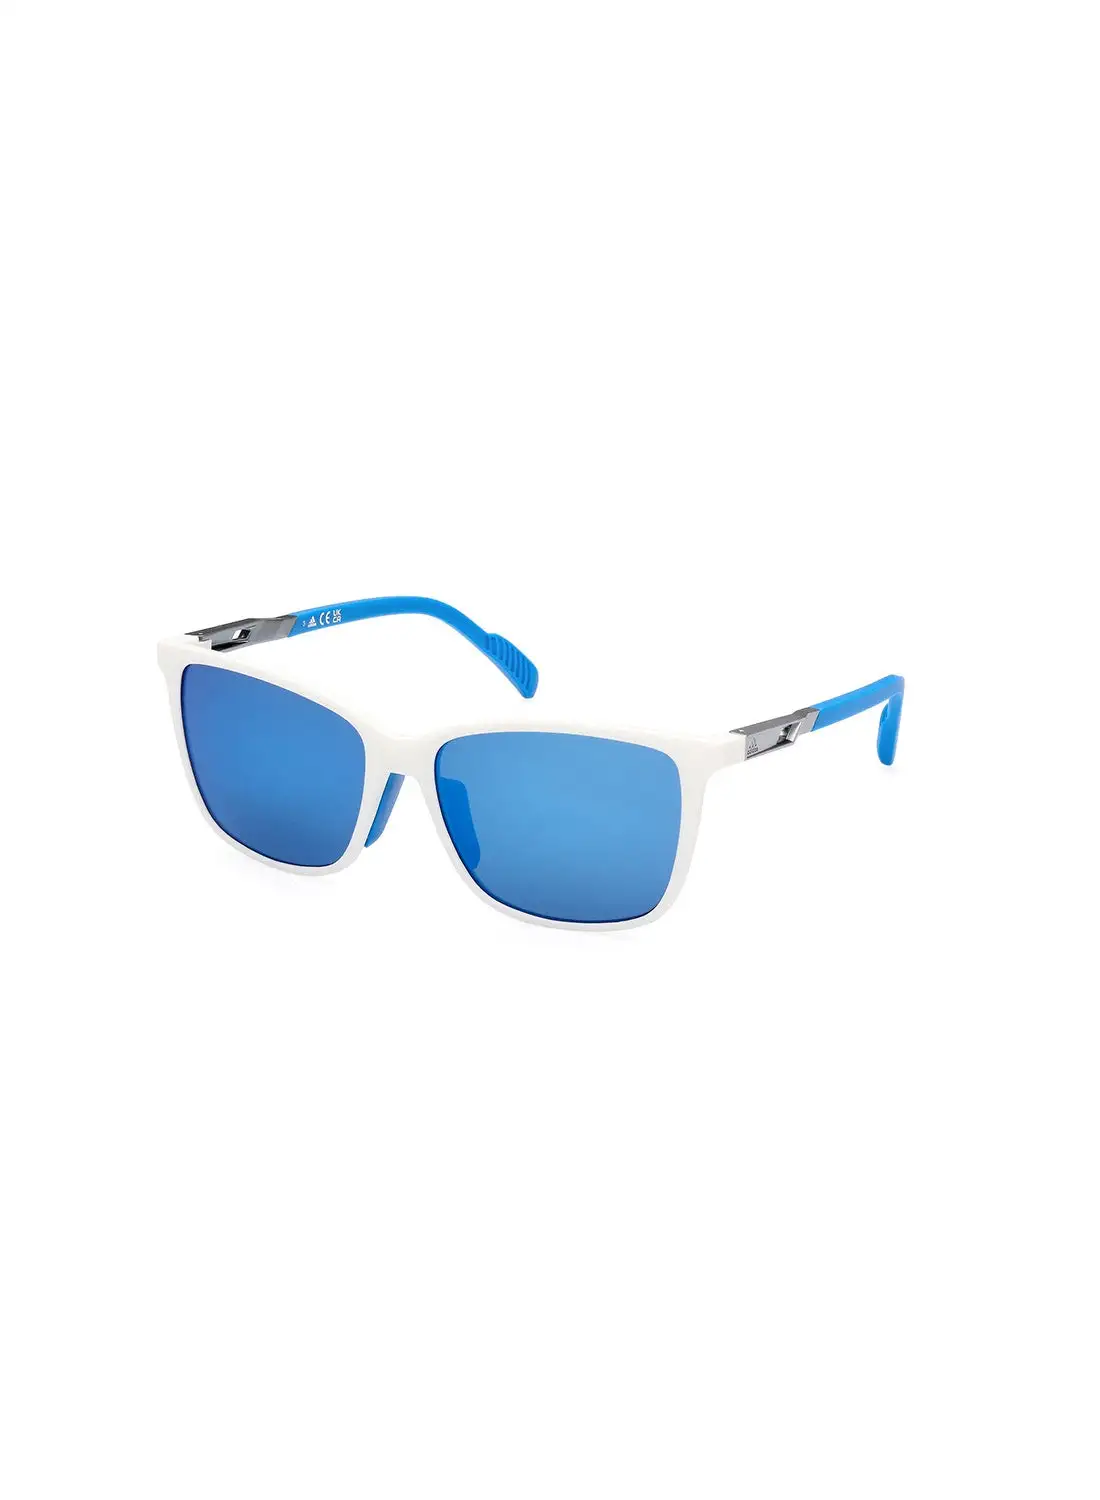 Adidas Unisex UV Protection Round Sunglasses - SP005924X58 - Lens Size: 58 Mm